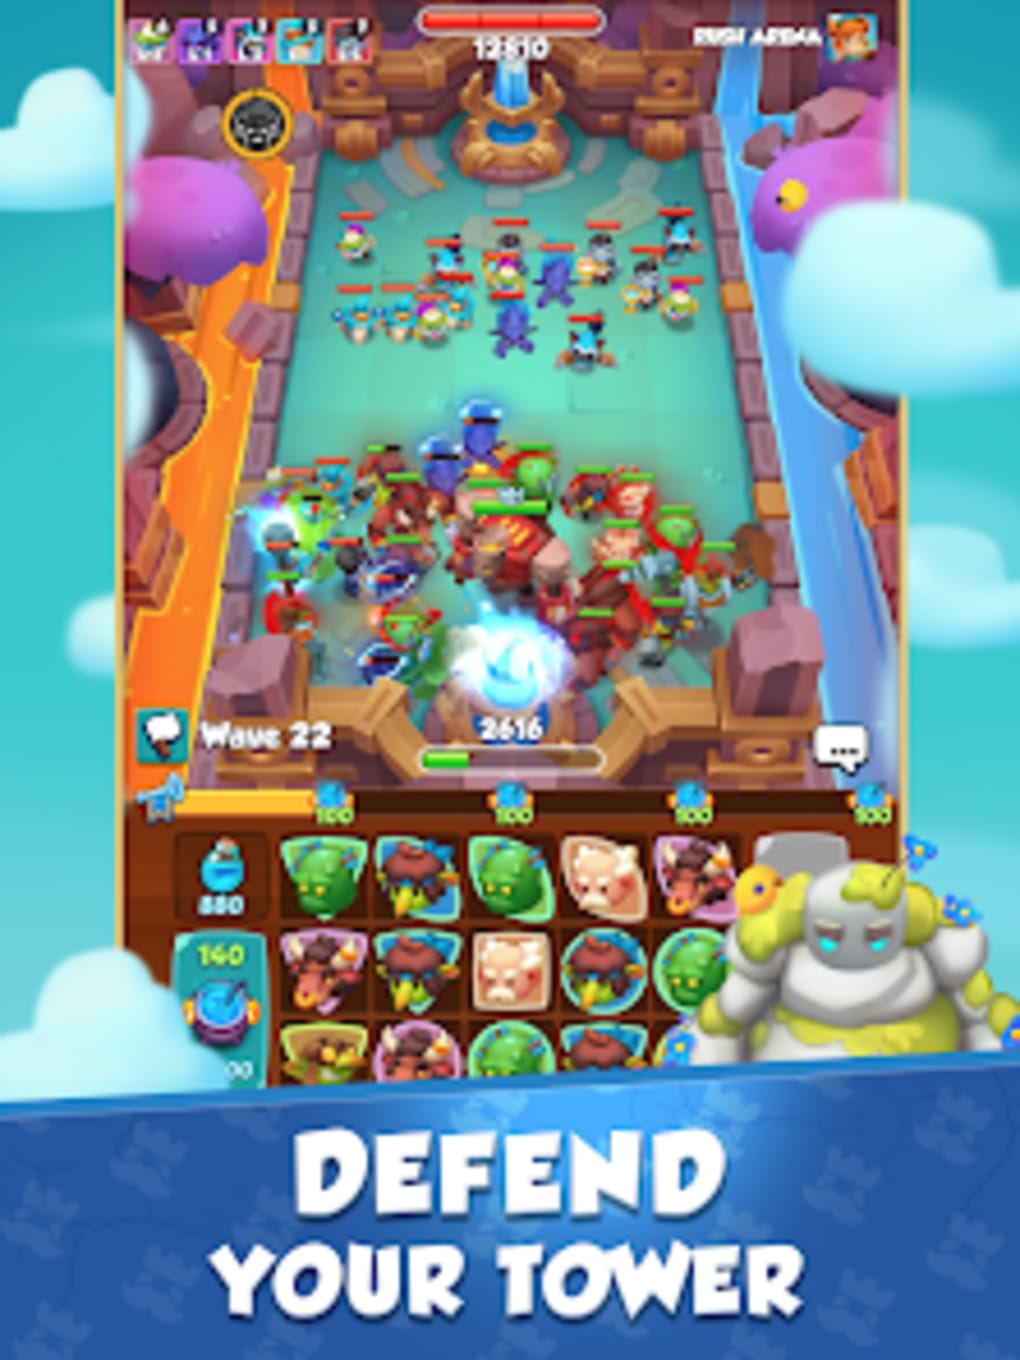 Rush Arena - Tower Defense Mod APK (Free Rewards) 5.1.5563 Download